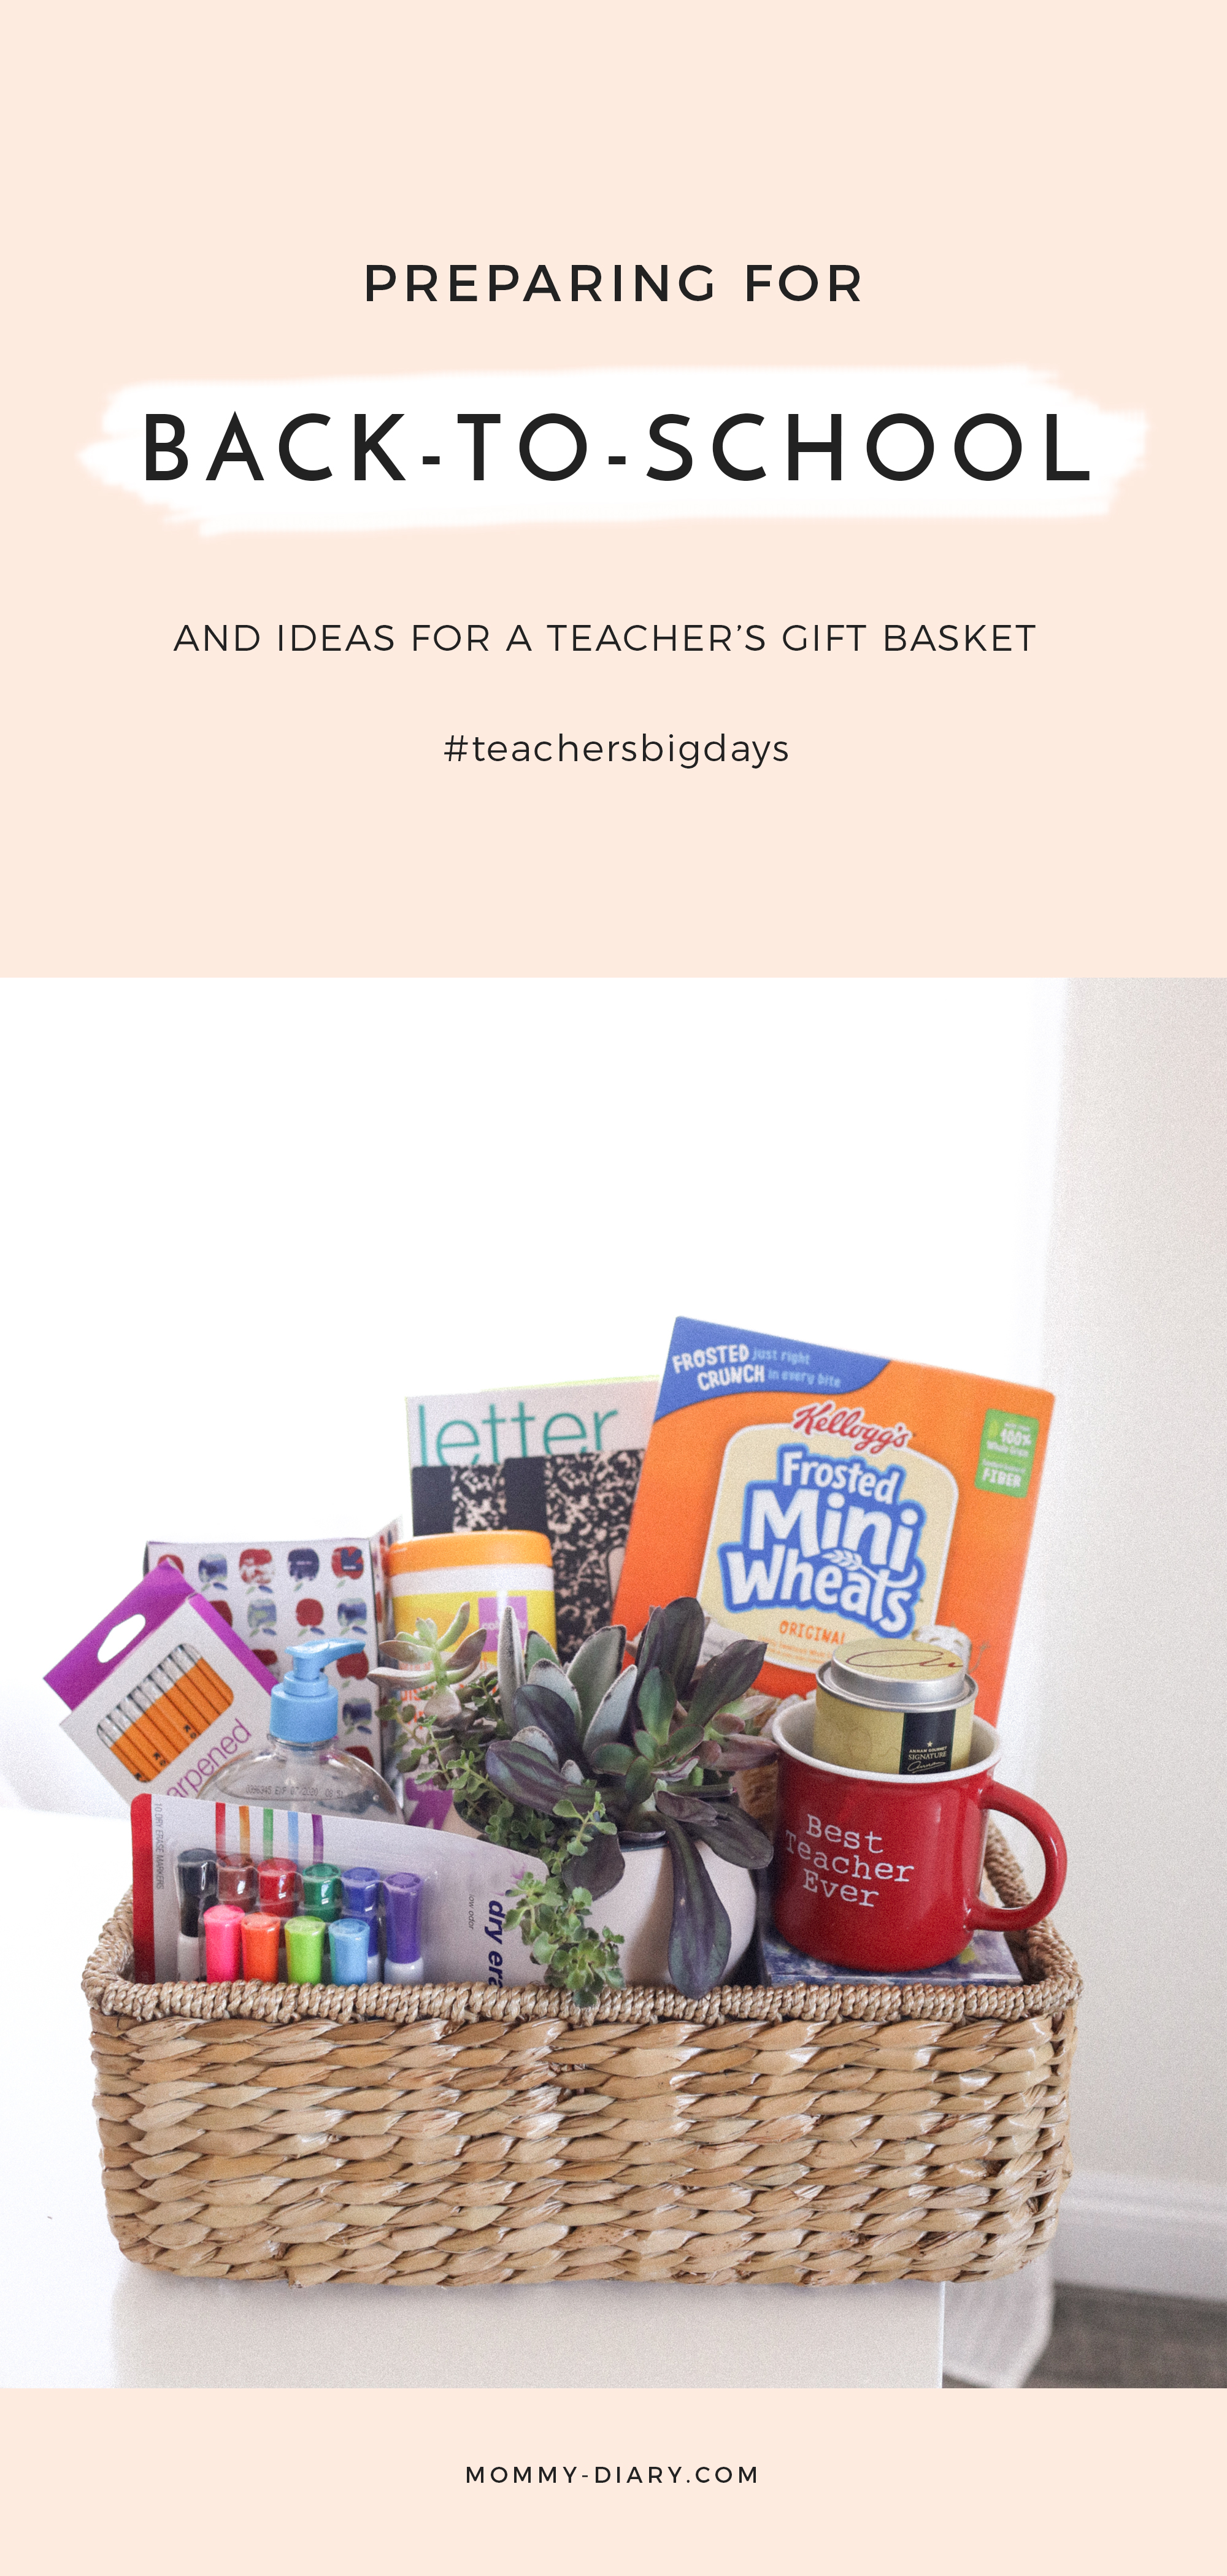 Ideas for a teacher's gift basket